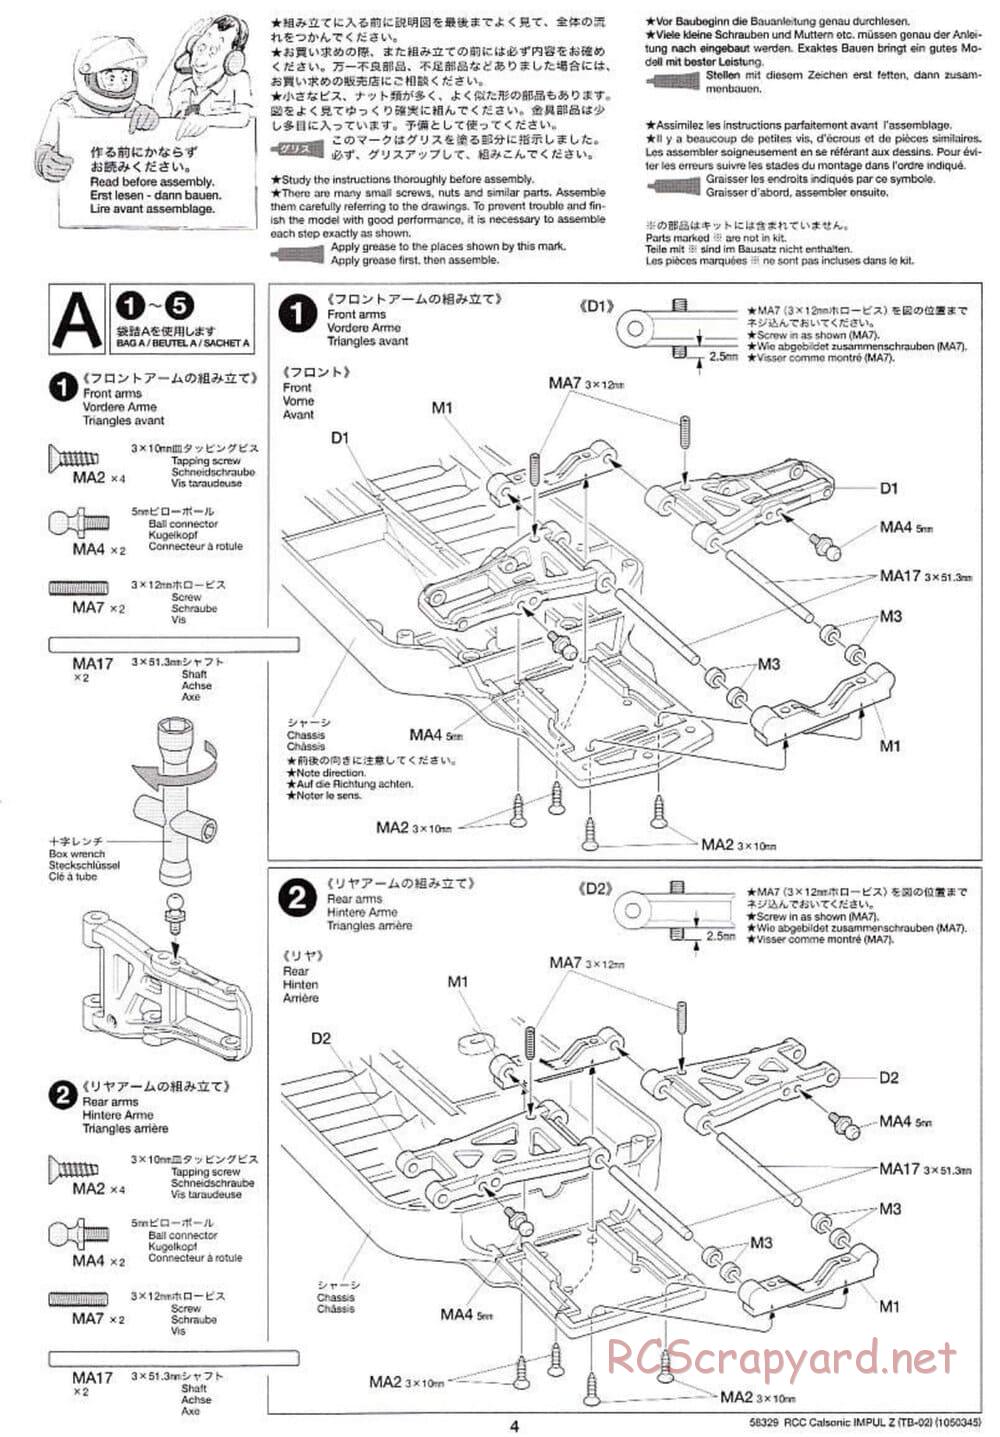 Tamiya - Calsonic Impul Z - TB-02 Chassis - Manual - Page 4